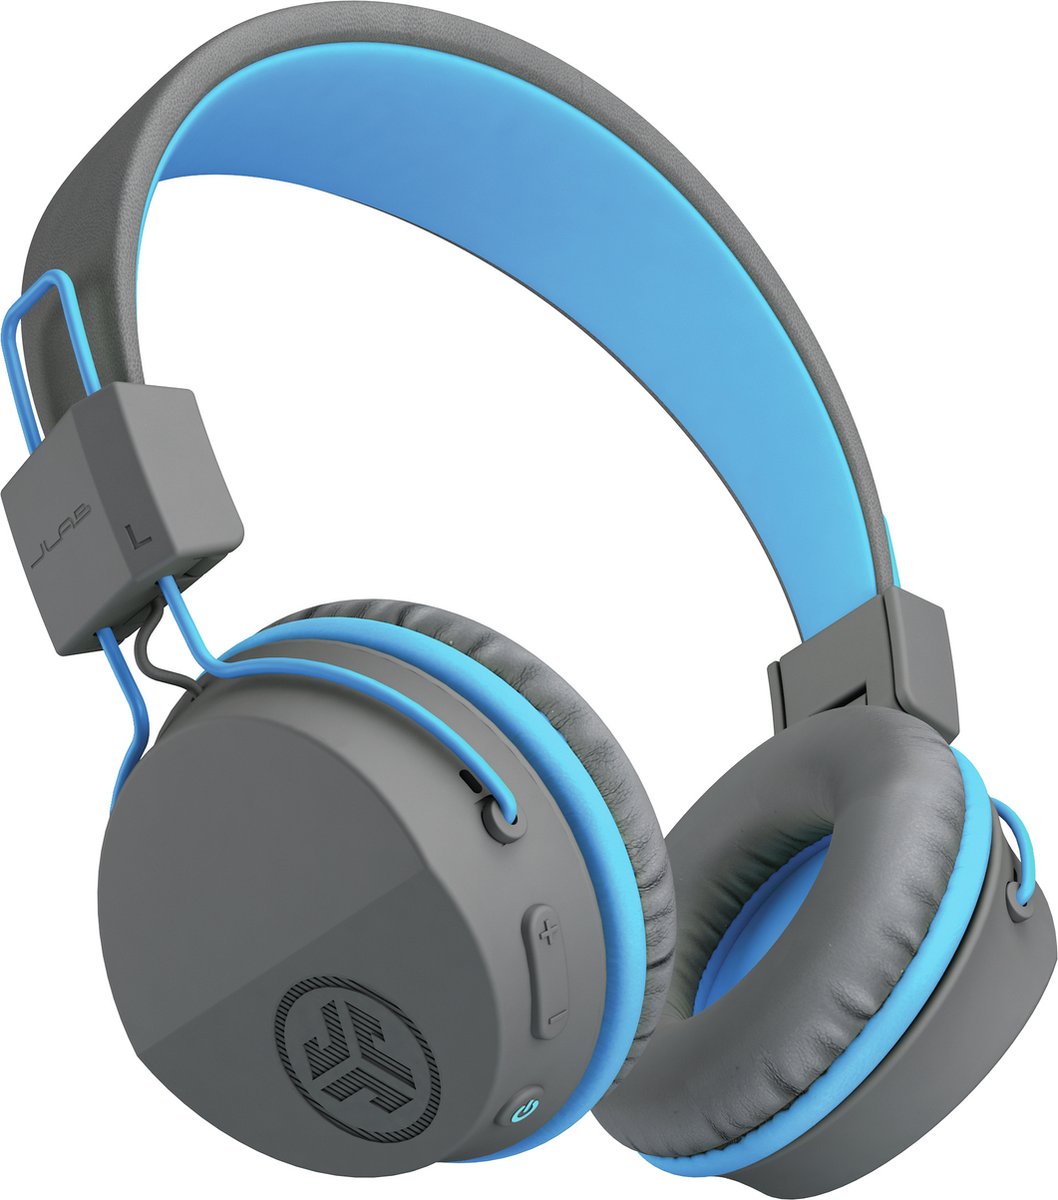 JLab Audio Jbuddies - Bluetooth kinder koptelefoon - Draadloze hoofdtelefoon kinderen - kinderkoptelefoon draadloos - Grijs/Blauw